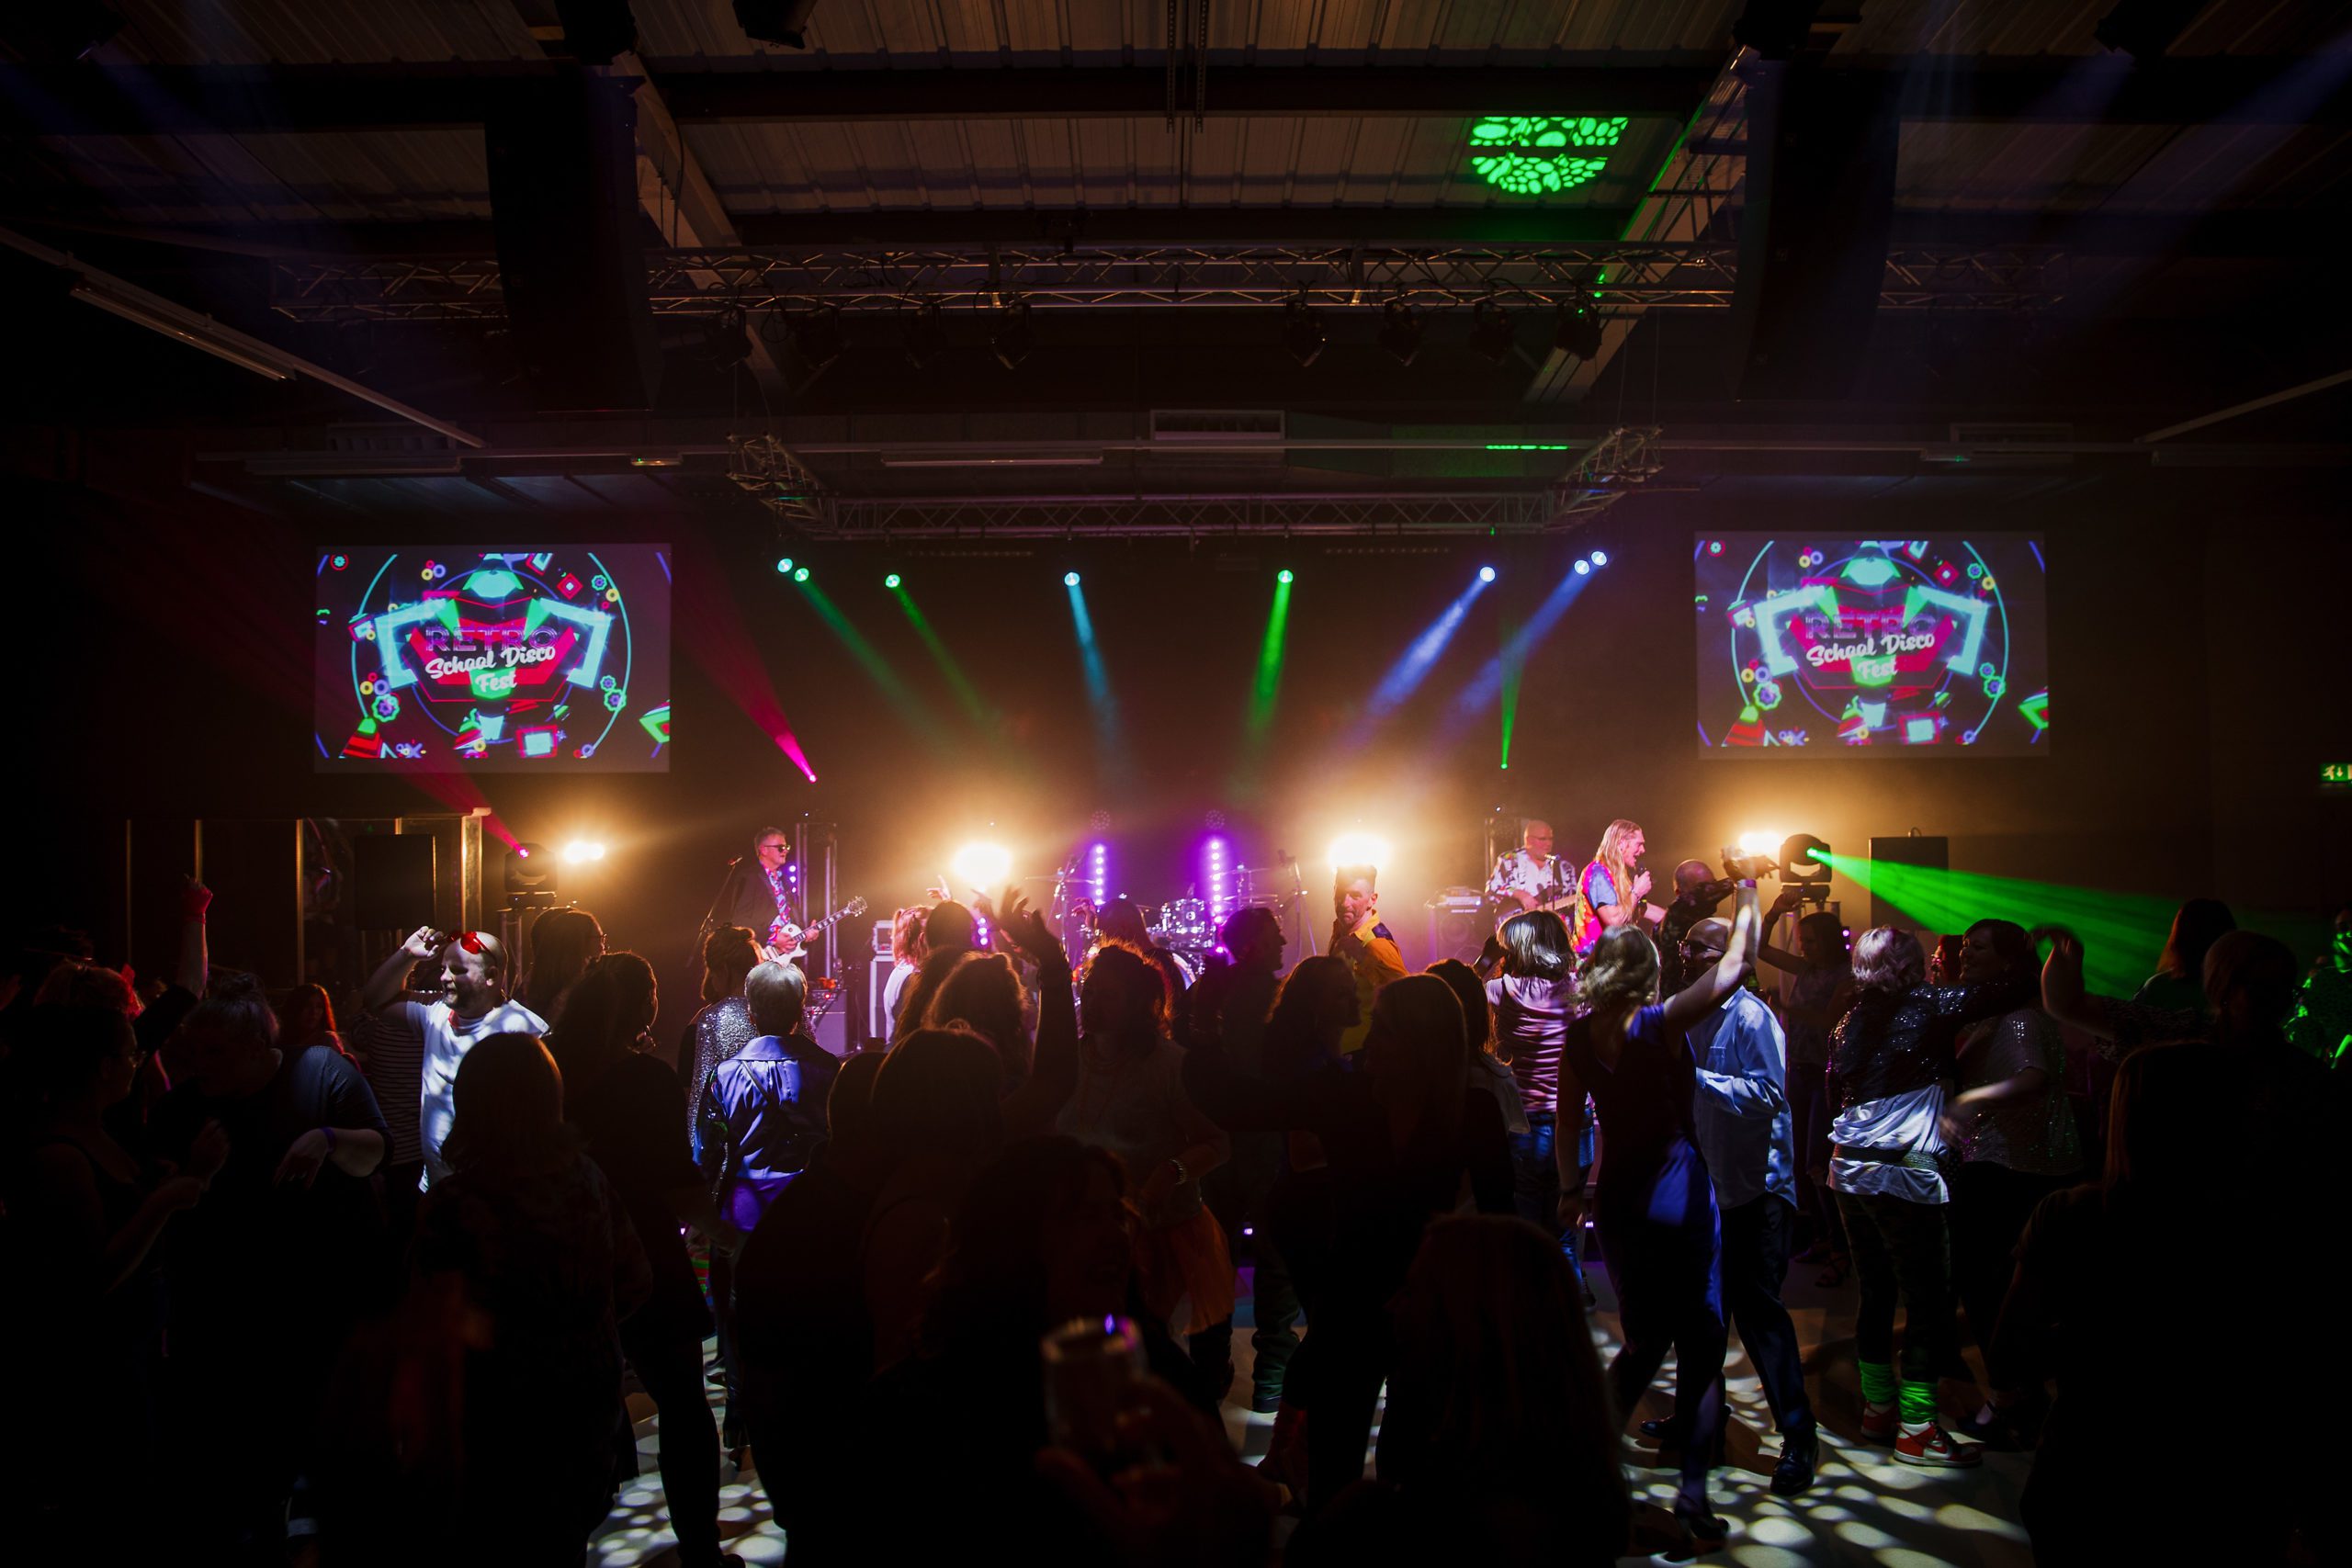 2022 Eastbourne Retro School Disco Fest night. Such an amazing 'Feel Good' atmosphere!